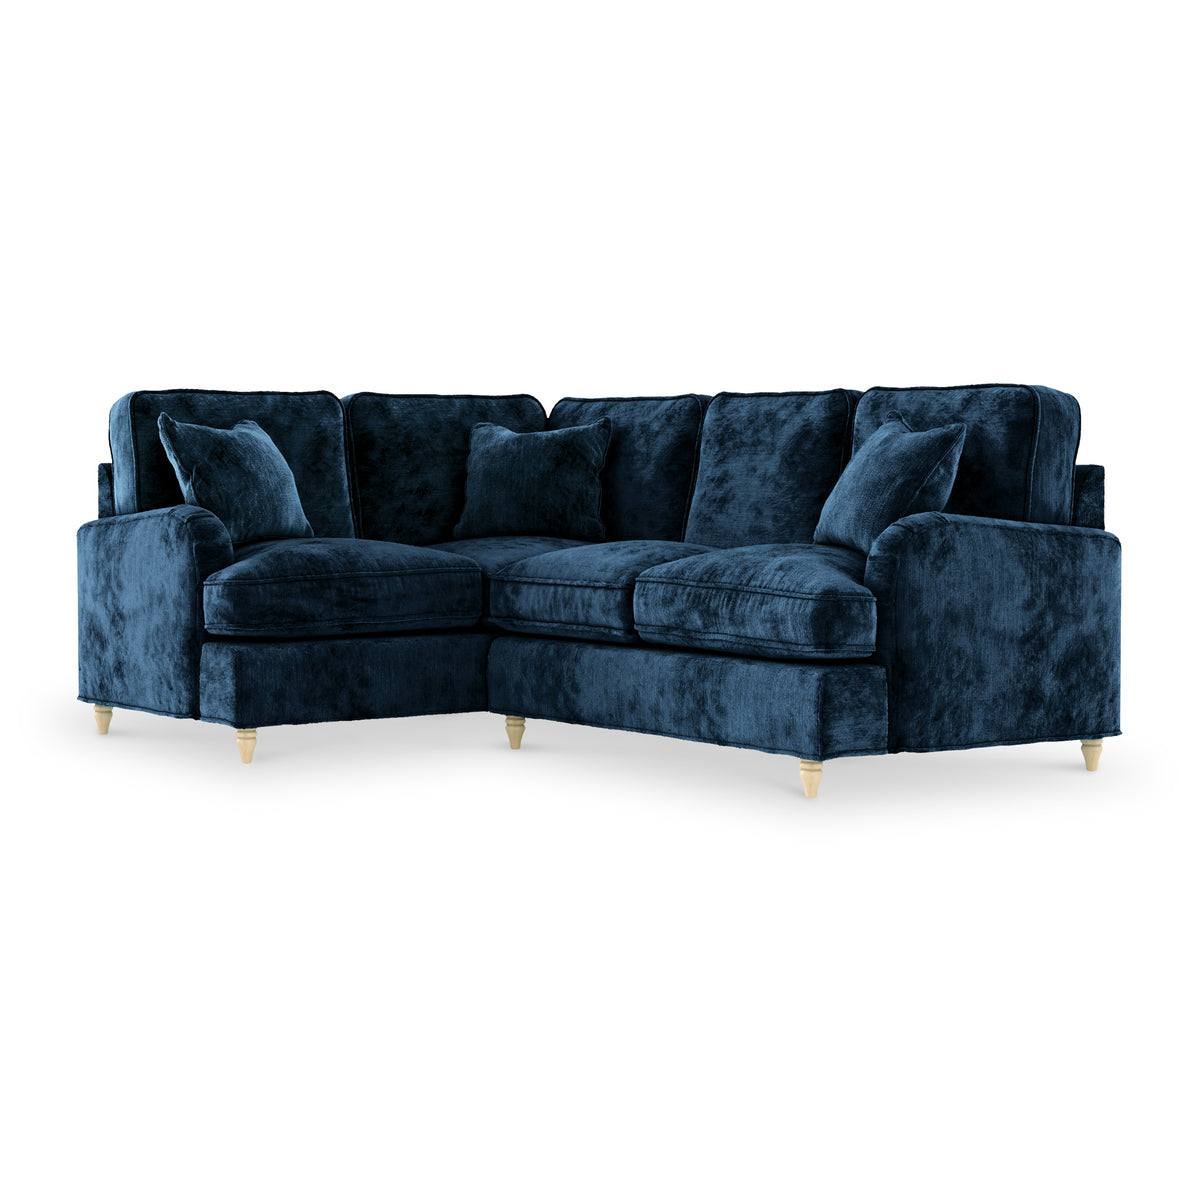 Arthur Navy LH Corner Sofa from Roseland furniture